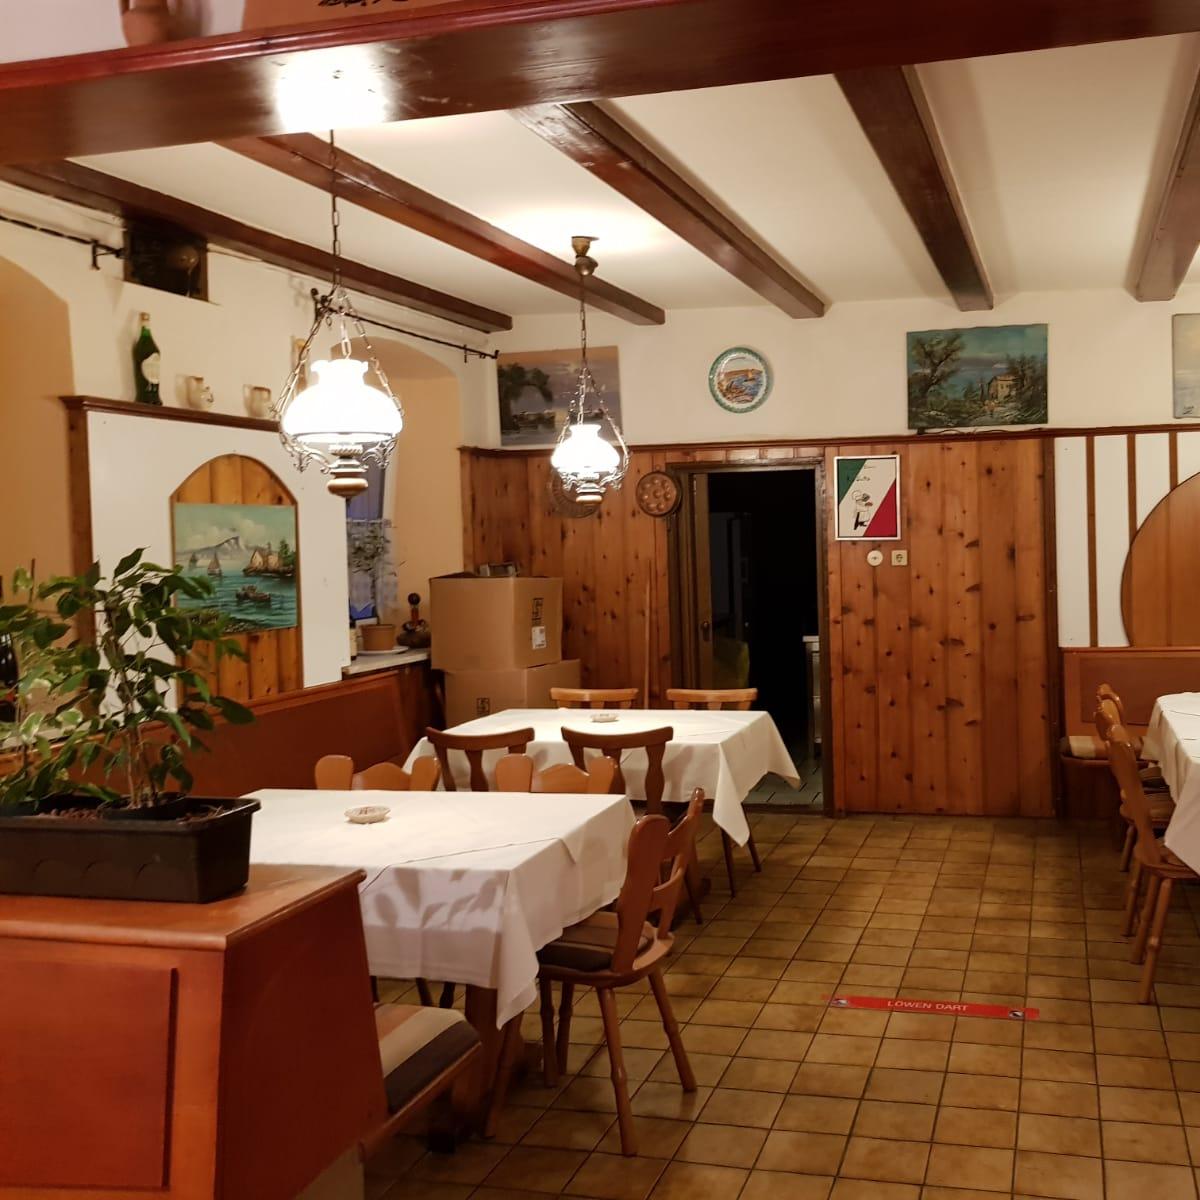 Restaurant "Ristorante la Grotta da Fabrizio" in Oberkotzau